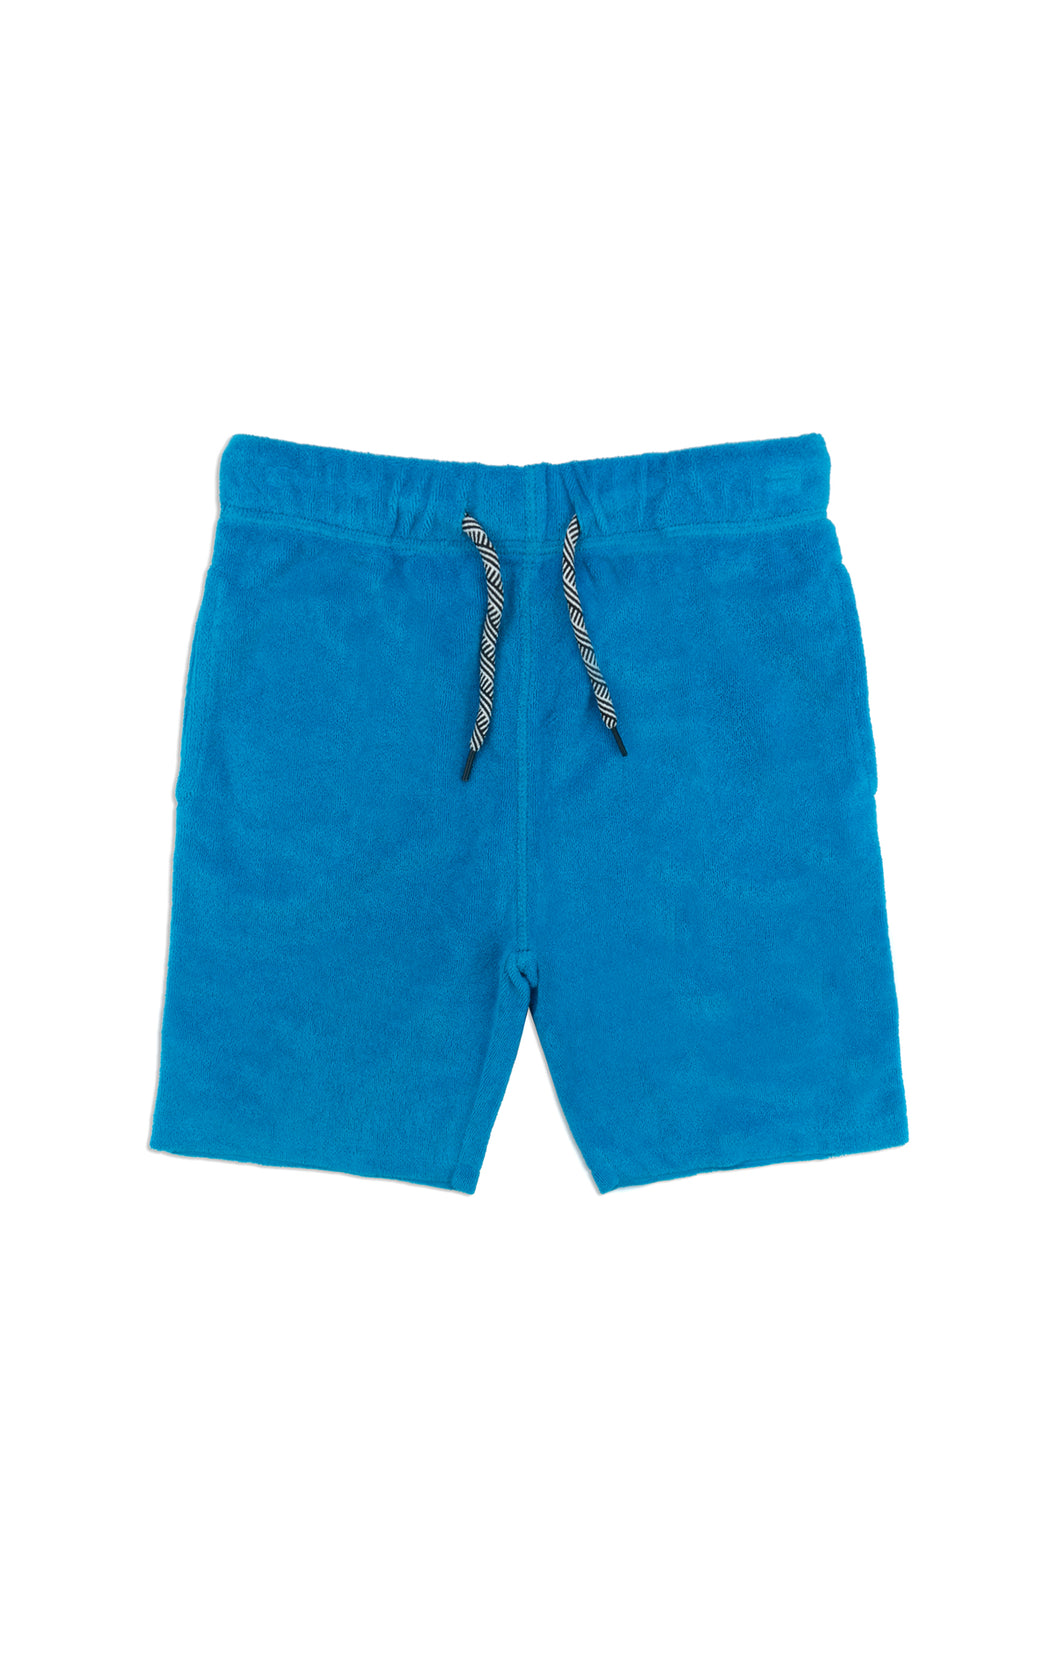 Camp Shorts - Blue Jewel